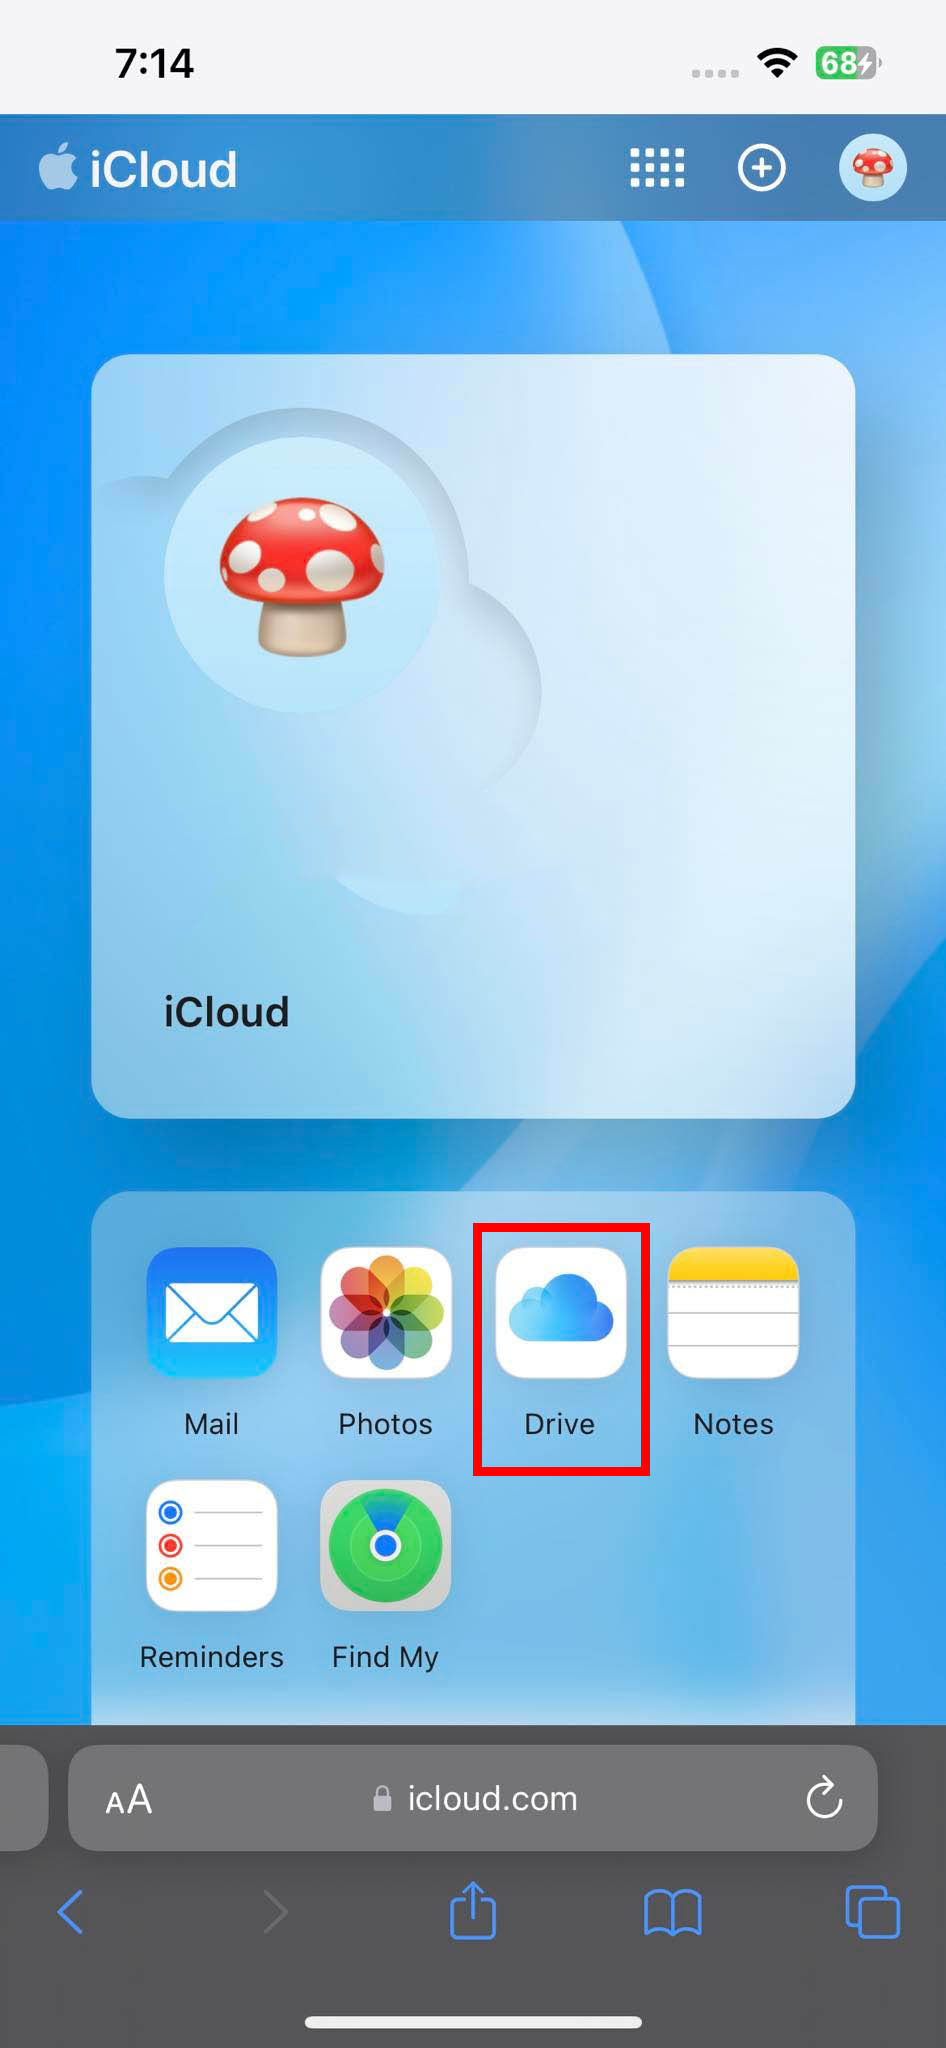 iCloud Home Screen